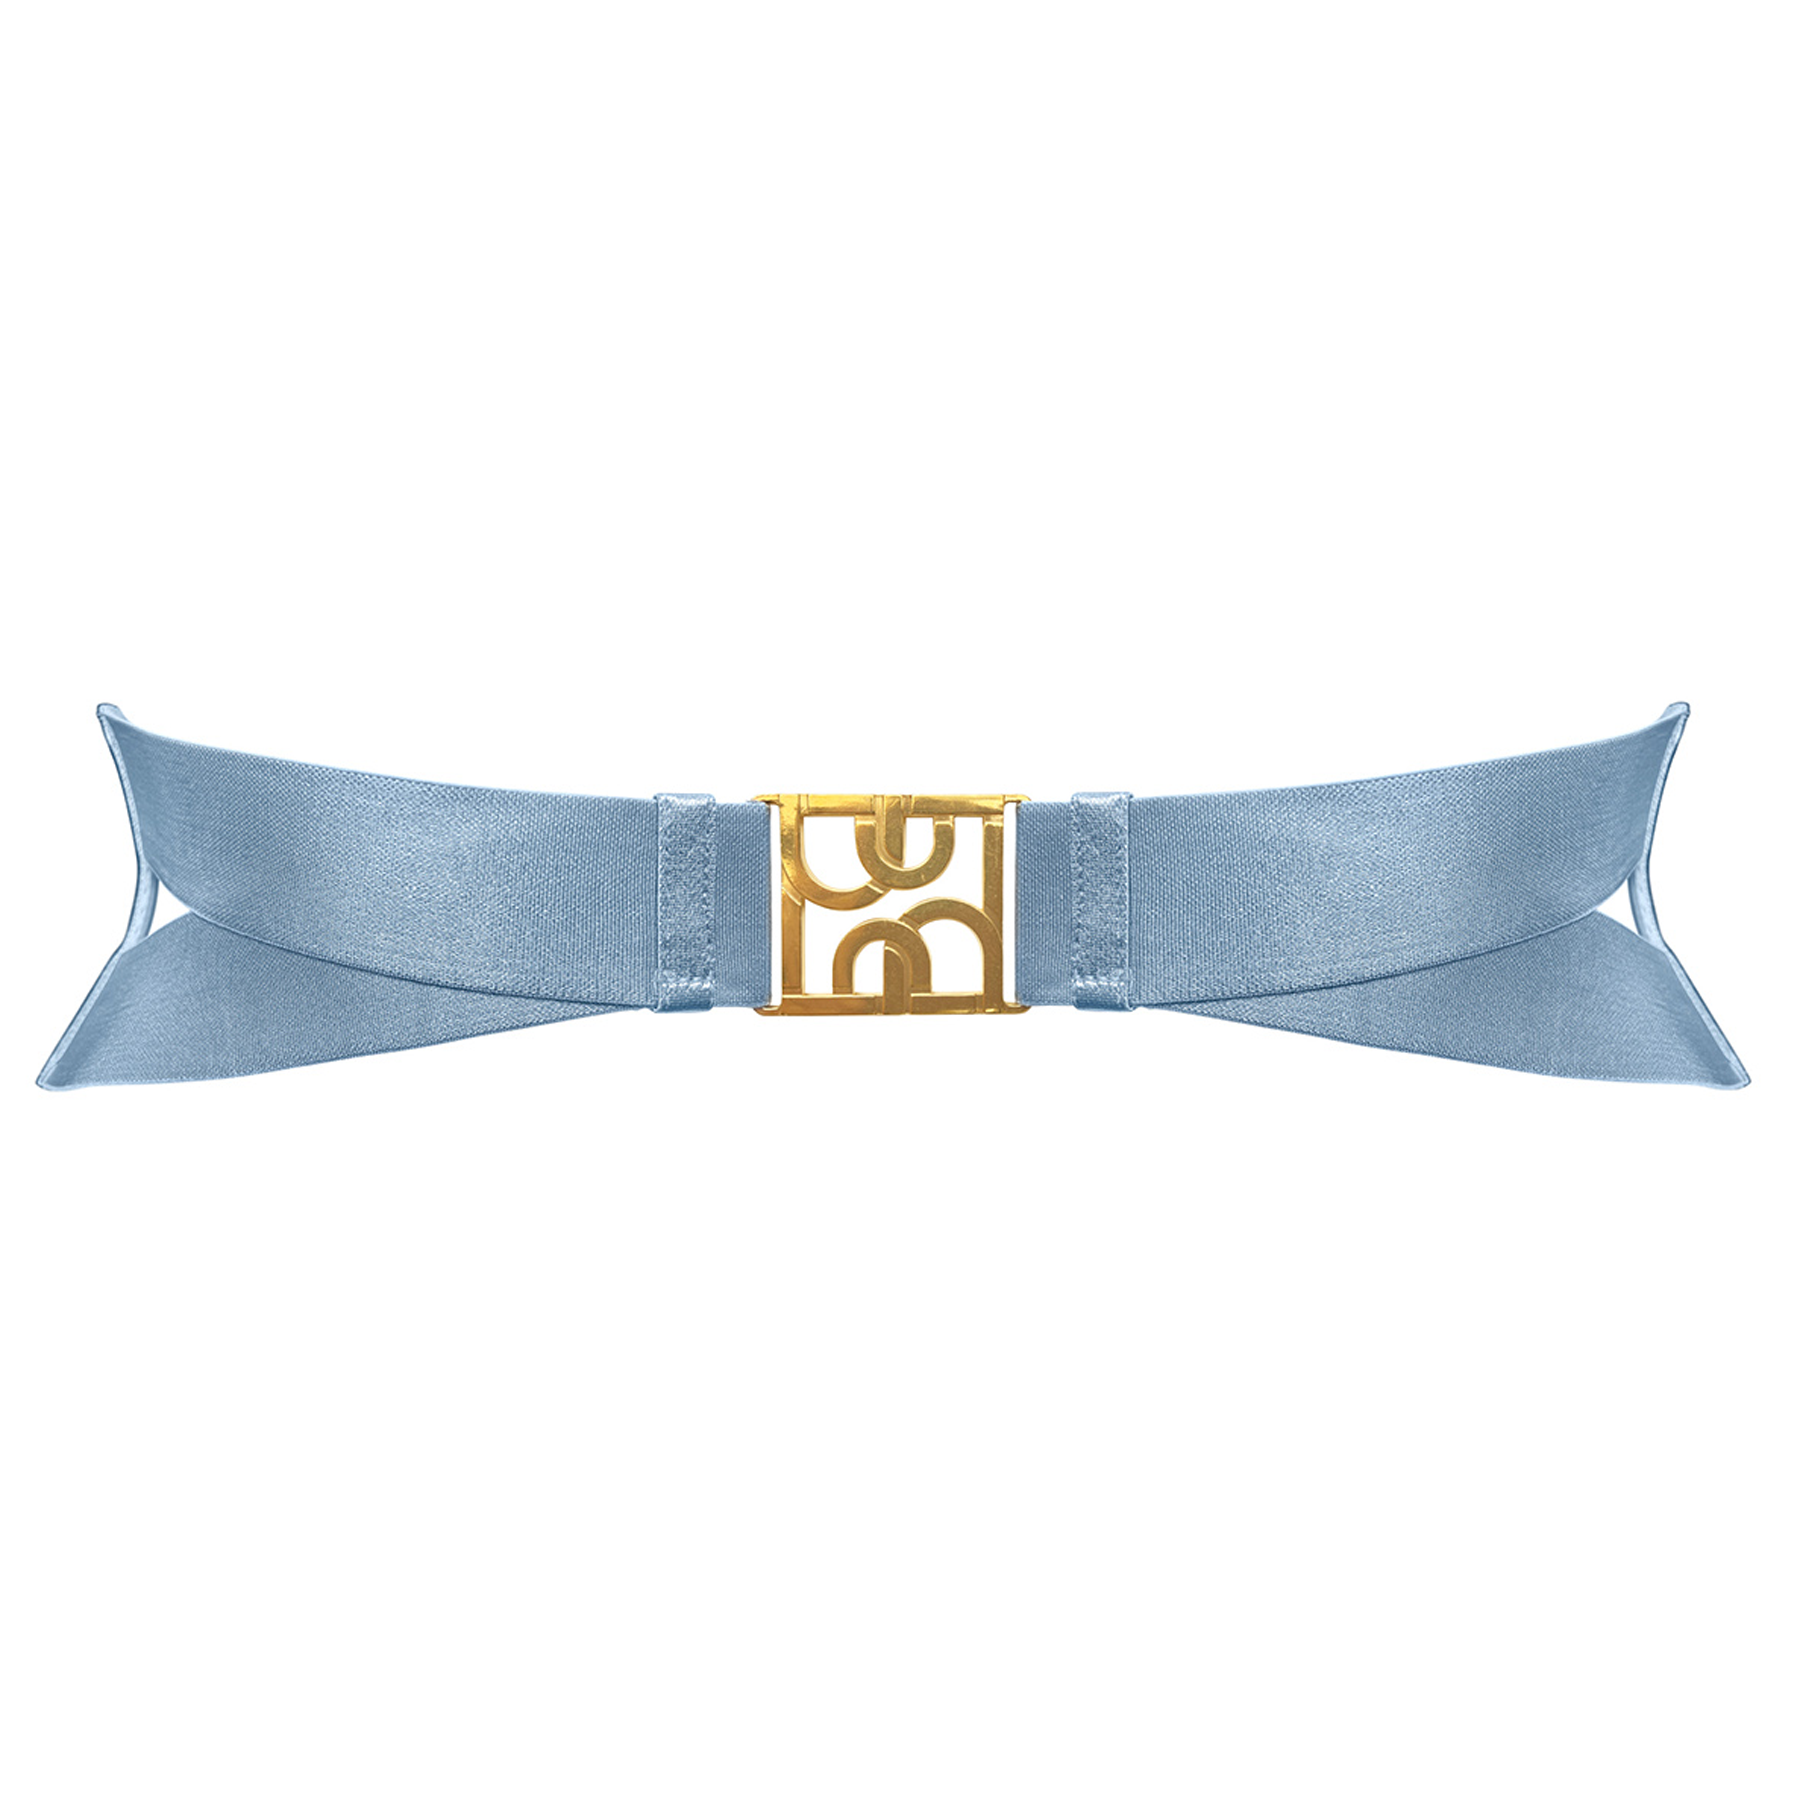 Vero adjustable belt by Bordelle - dusty blue